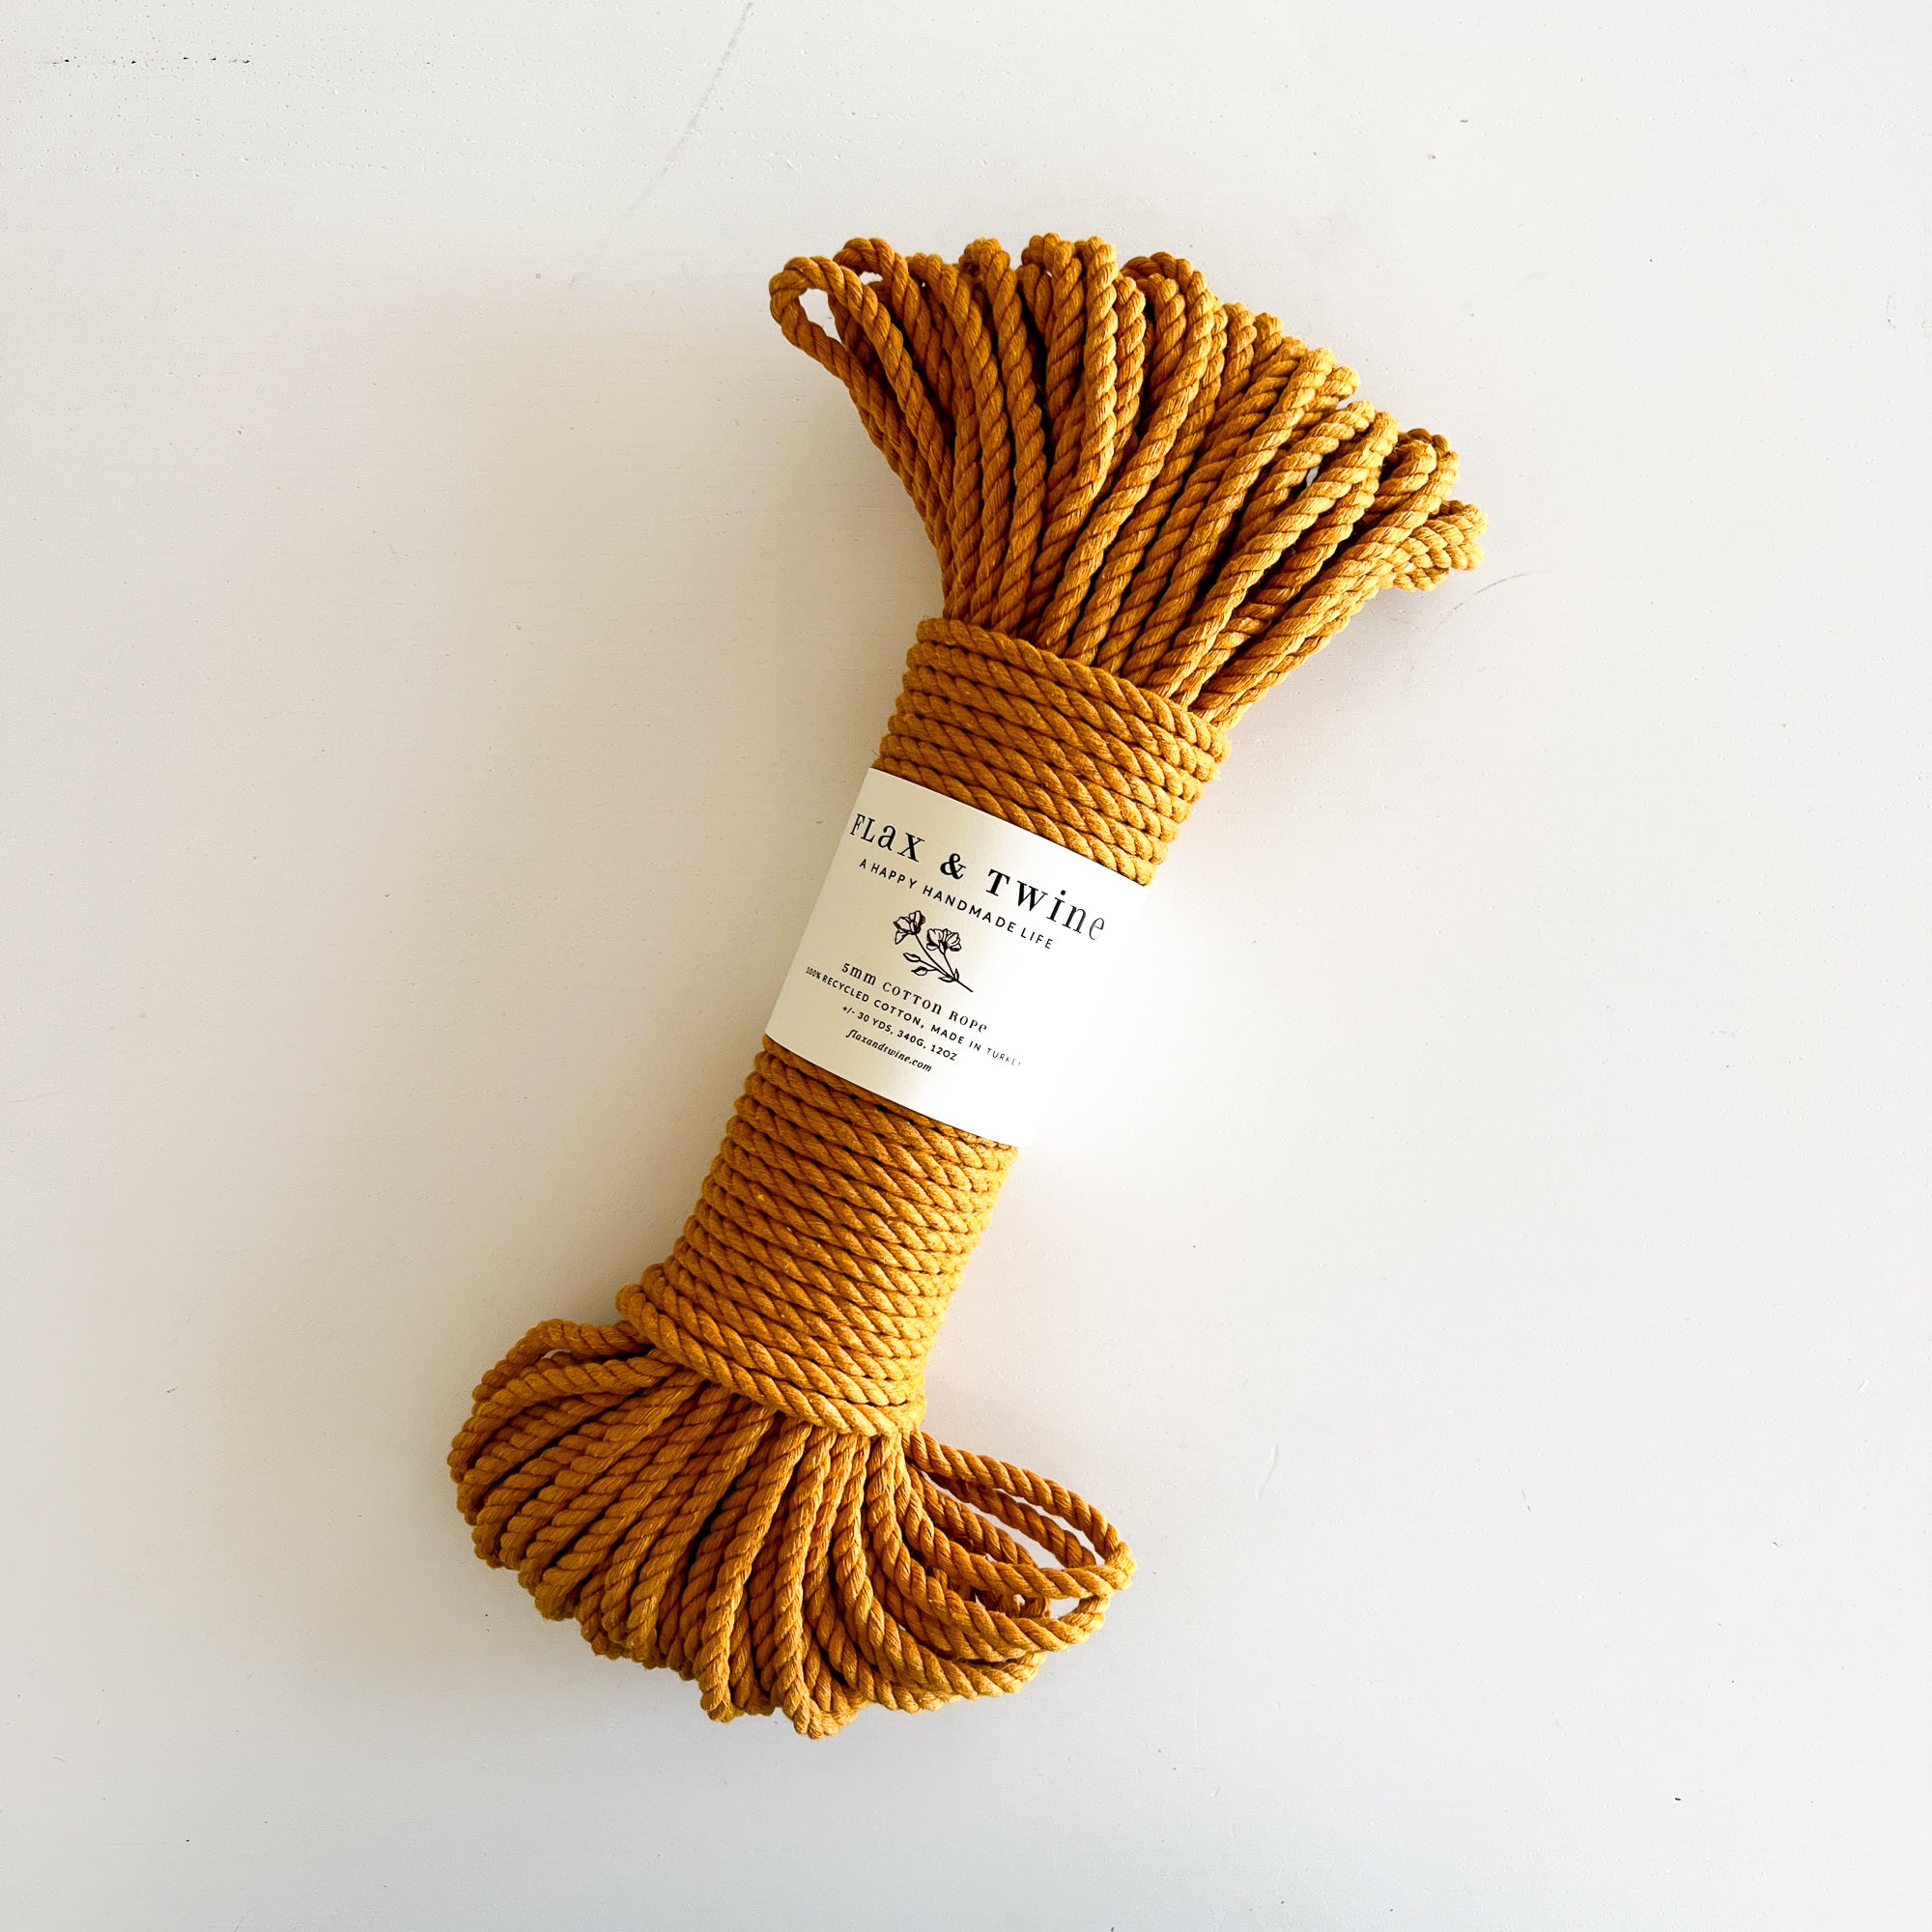 Flax & Twine 5mm Brenn Twisted Cotton Rope